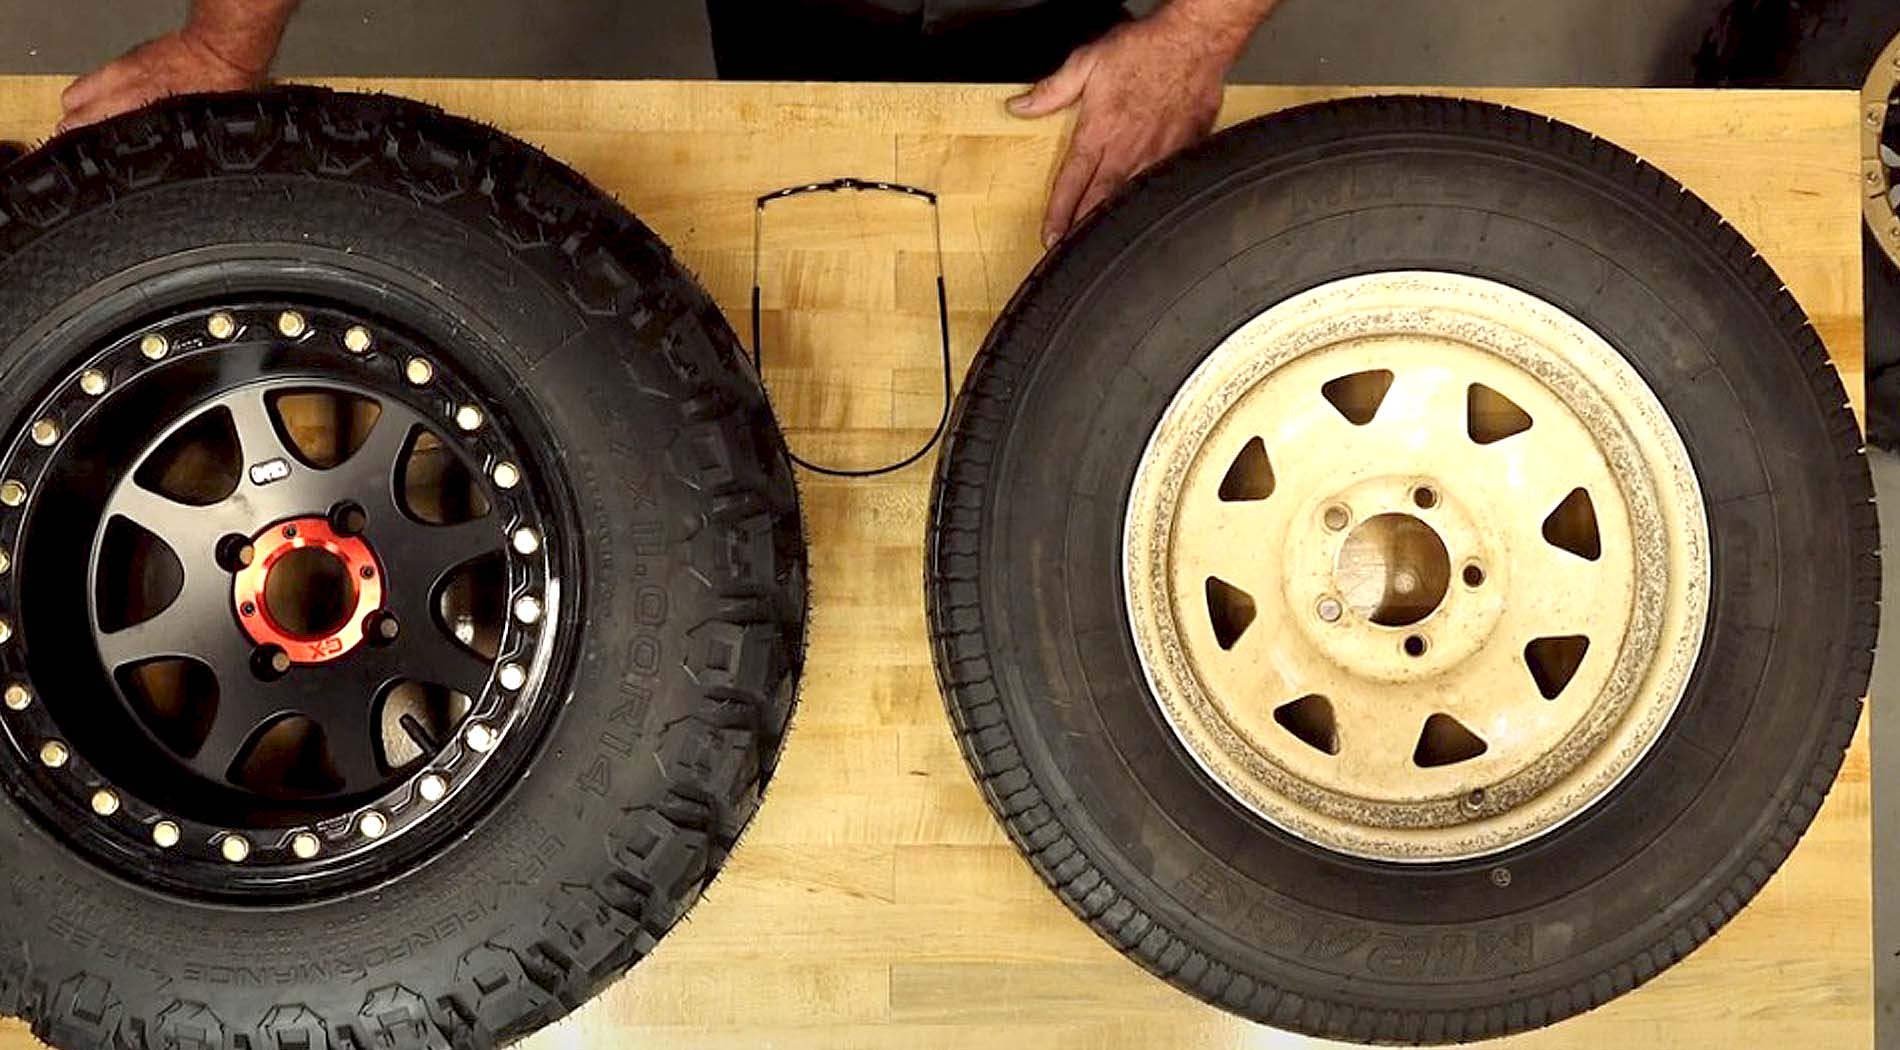 Metric size tire vs standard size tire